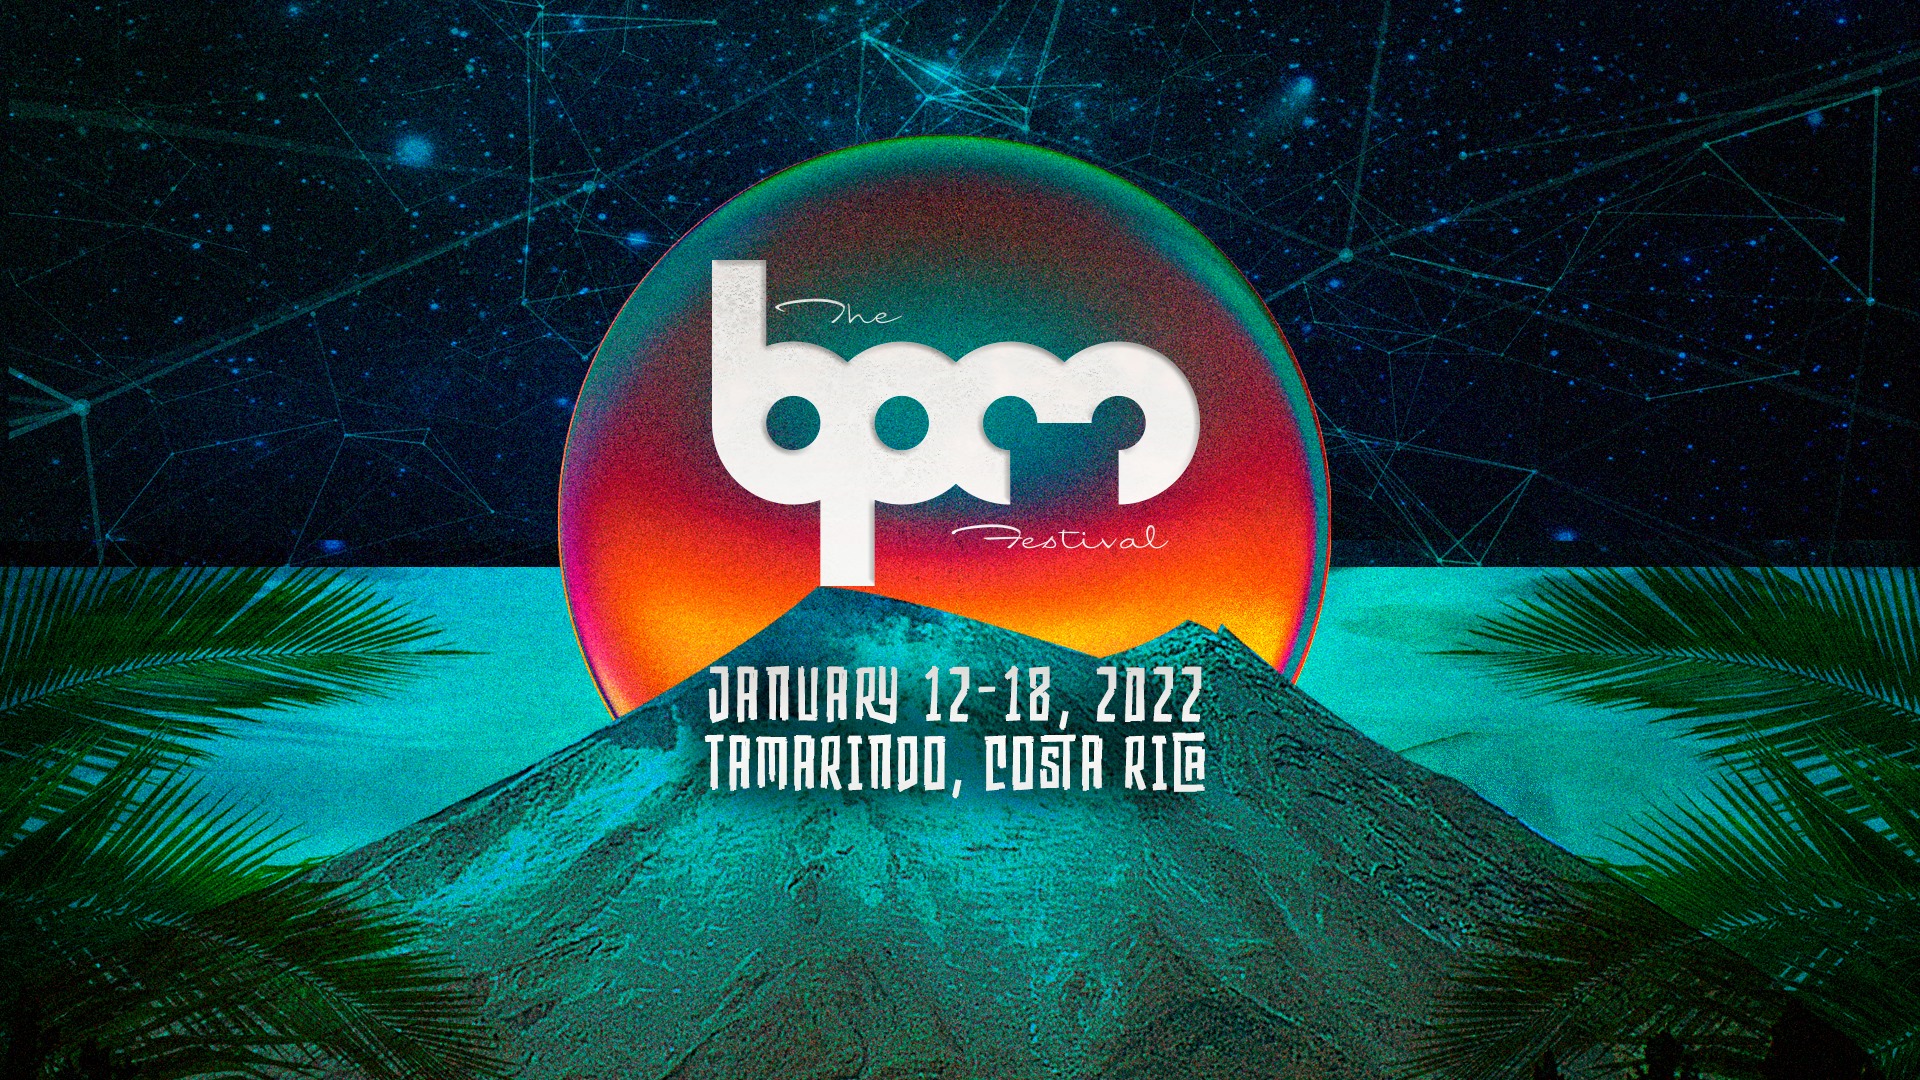 BPM Festival Costa Rica postponed to 2022